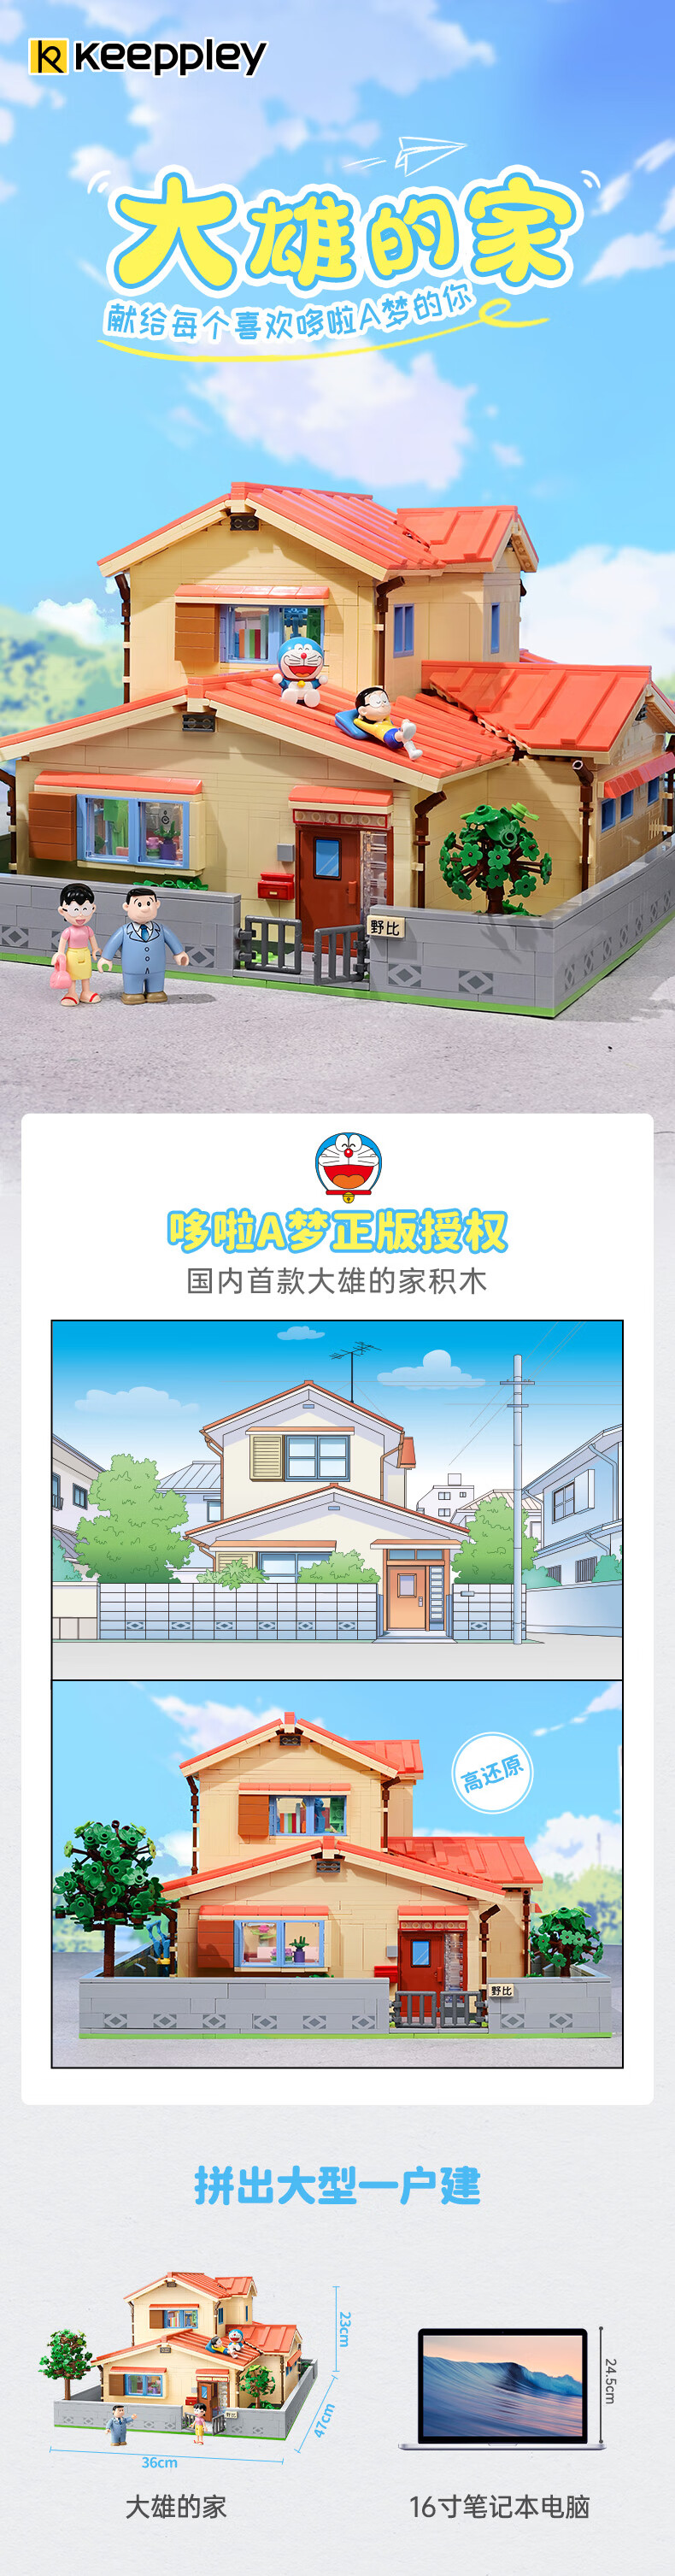 Keeppley K20422 Juego de juguetes de bloques de construcción La casa de Nobi Nobita